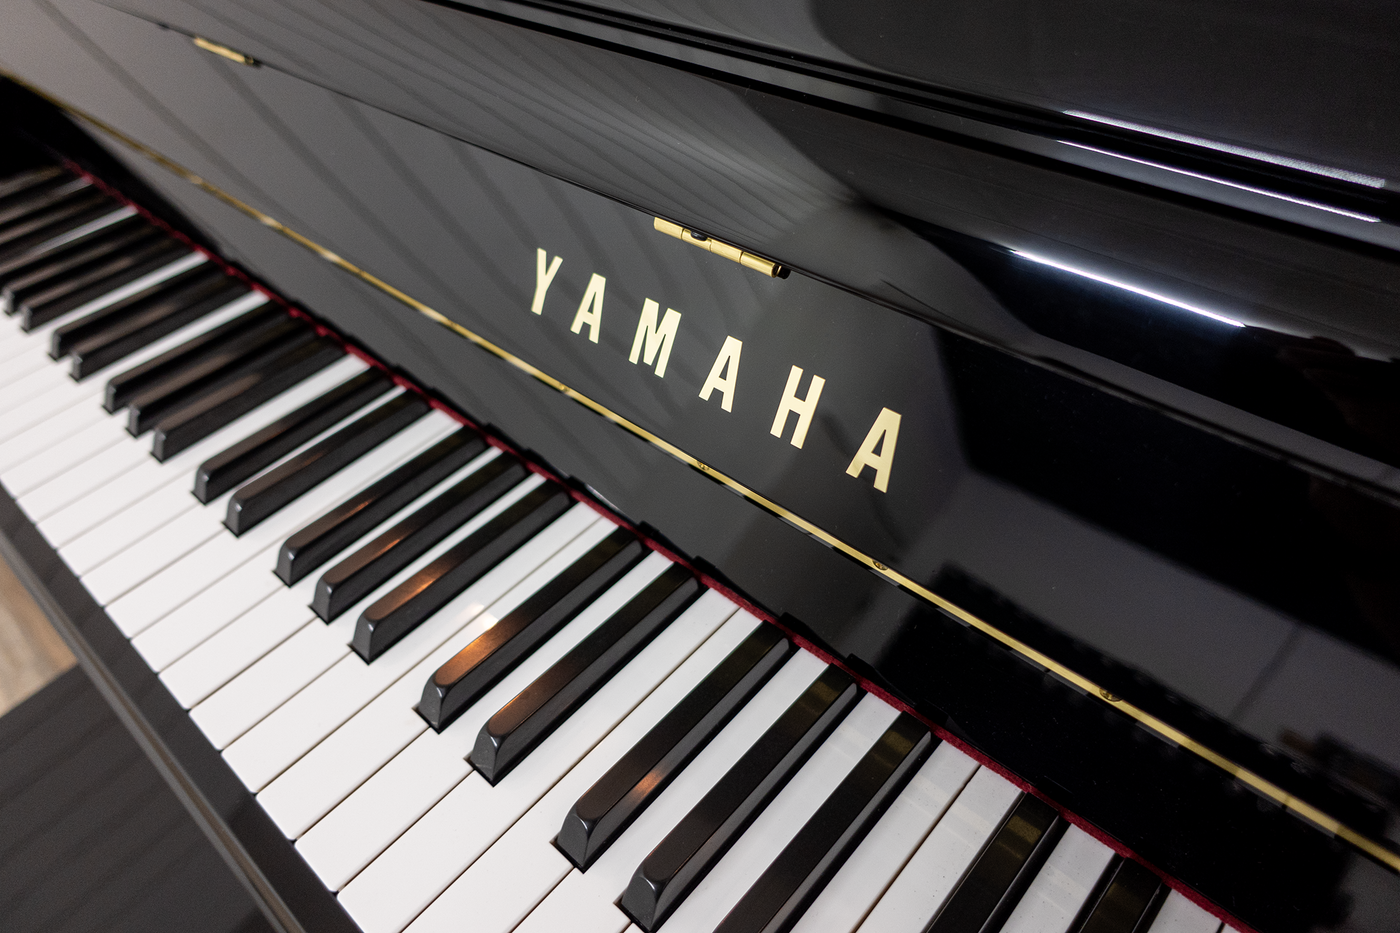 Yamaha T118 Upright Piano